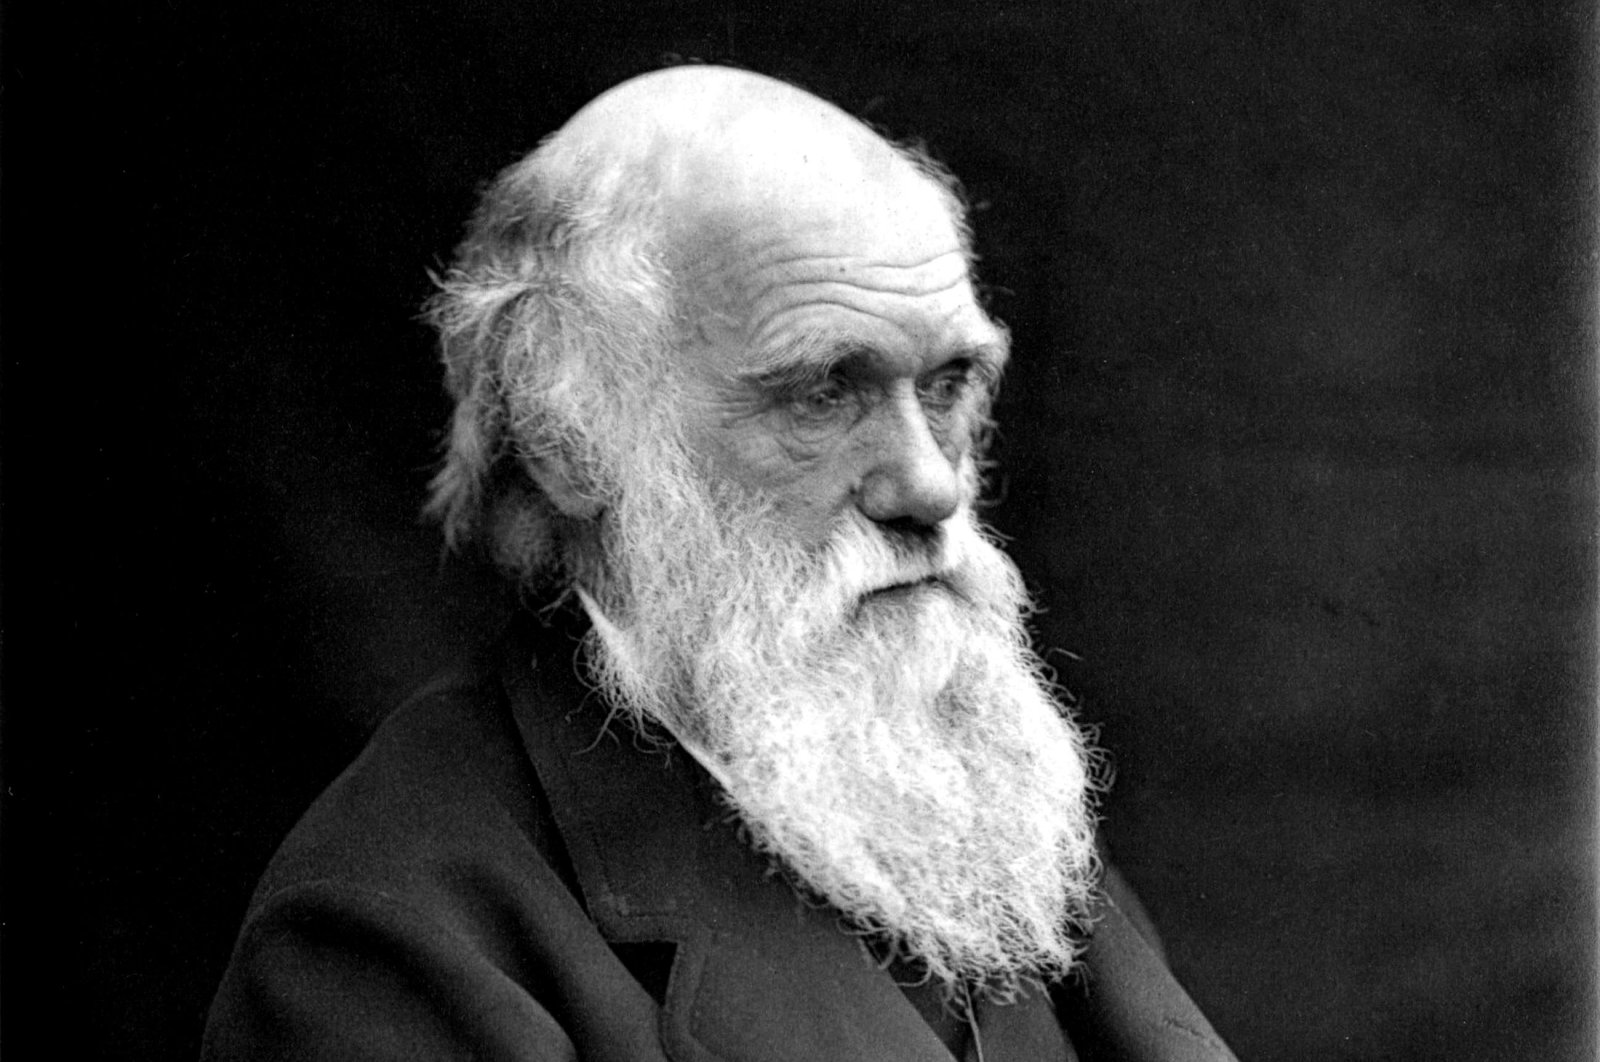 Buku catatan Darwin yang hilang dikembalikan ke Cambridge setelah 20 tahun